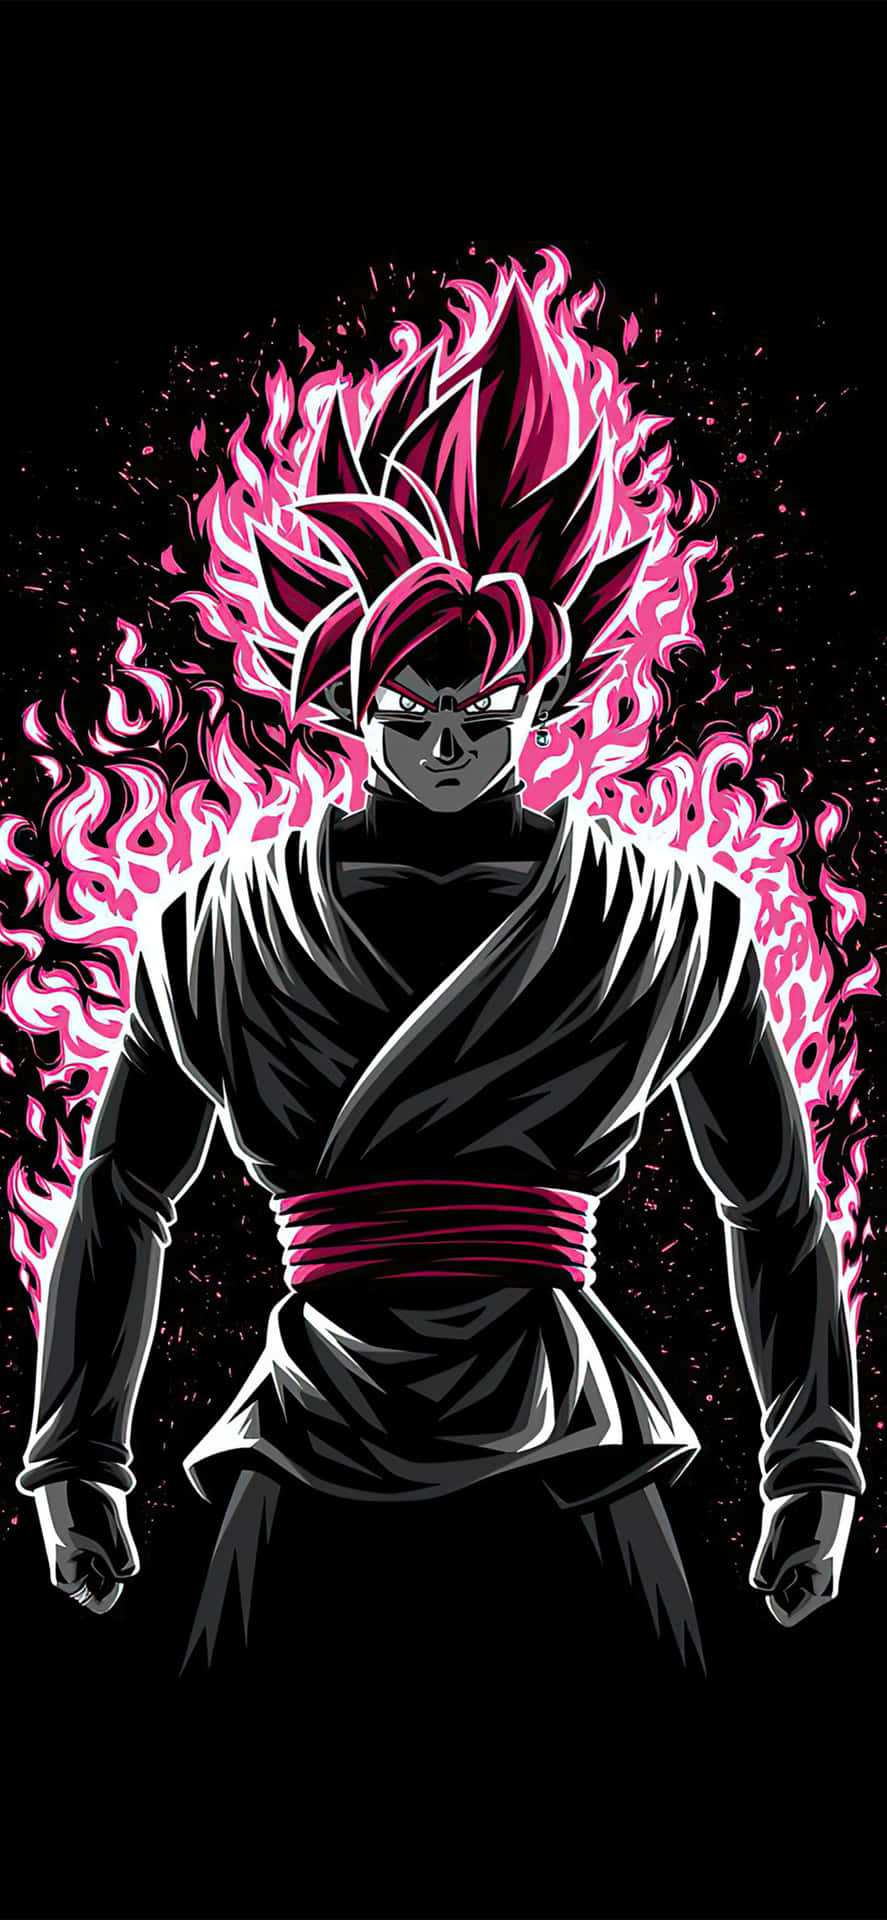 Black Goku Illustration Dragon Ball Super iPhone Wallpaper